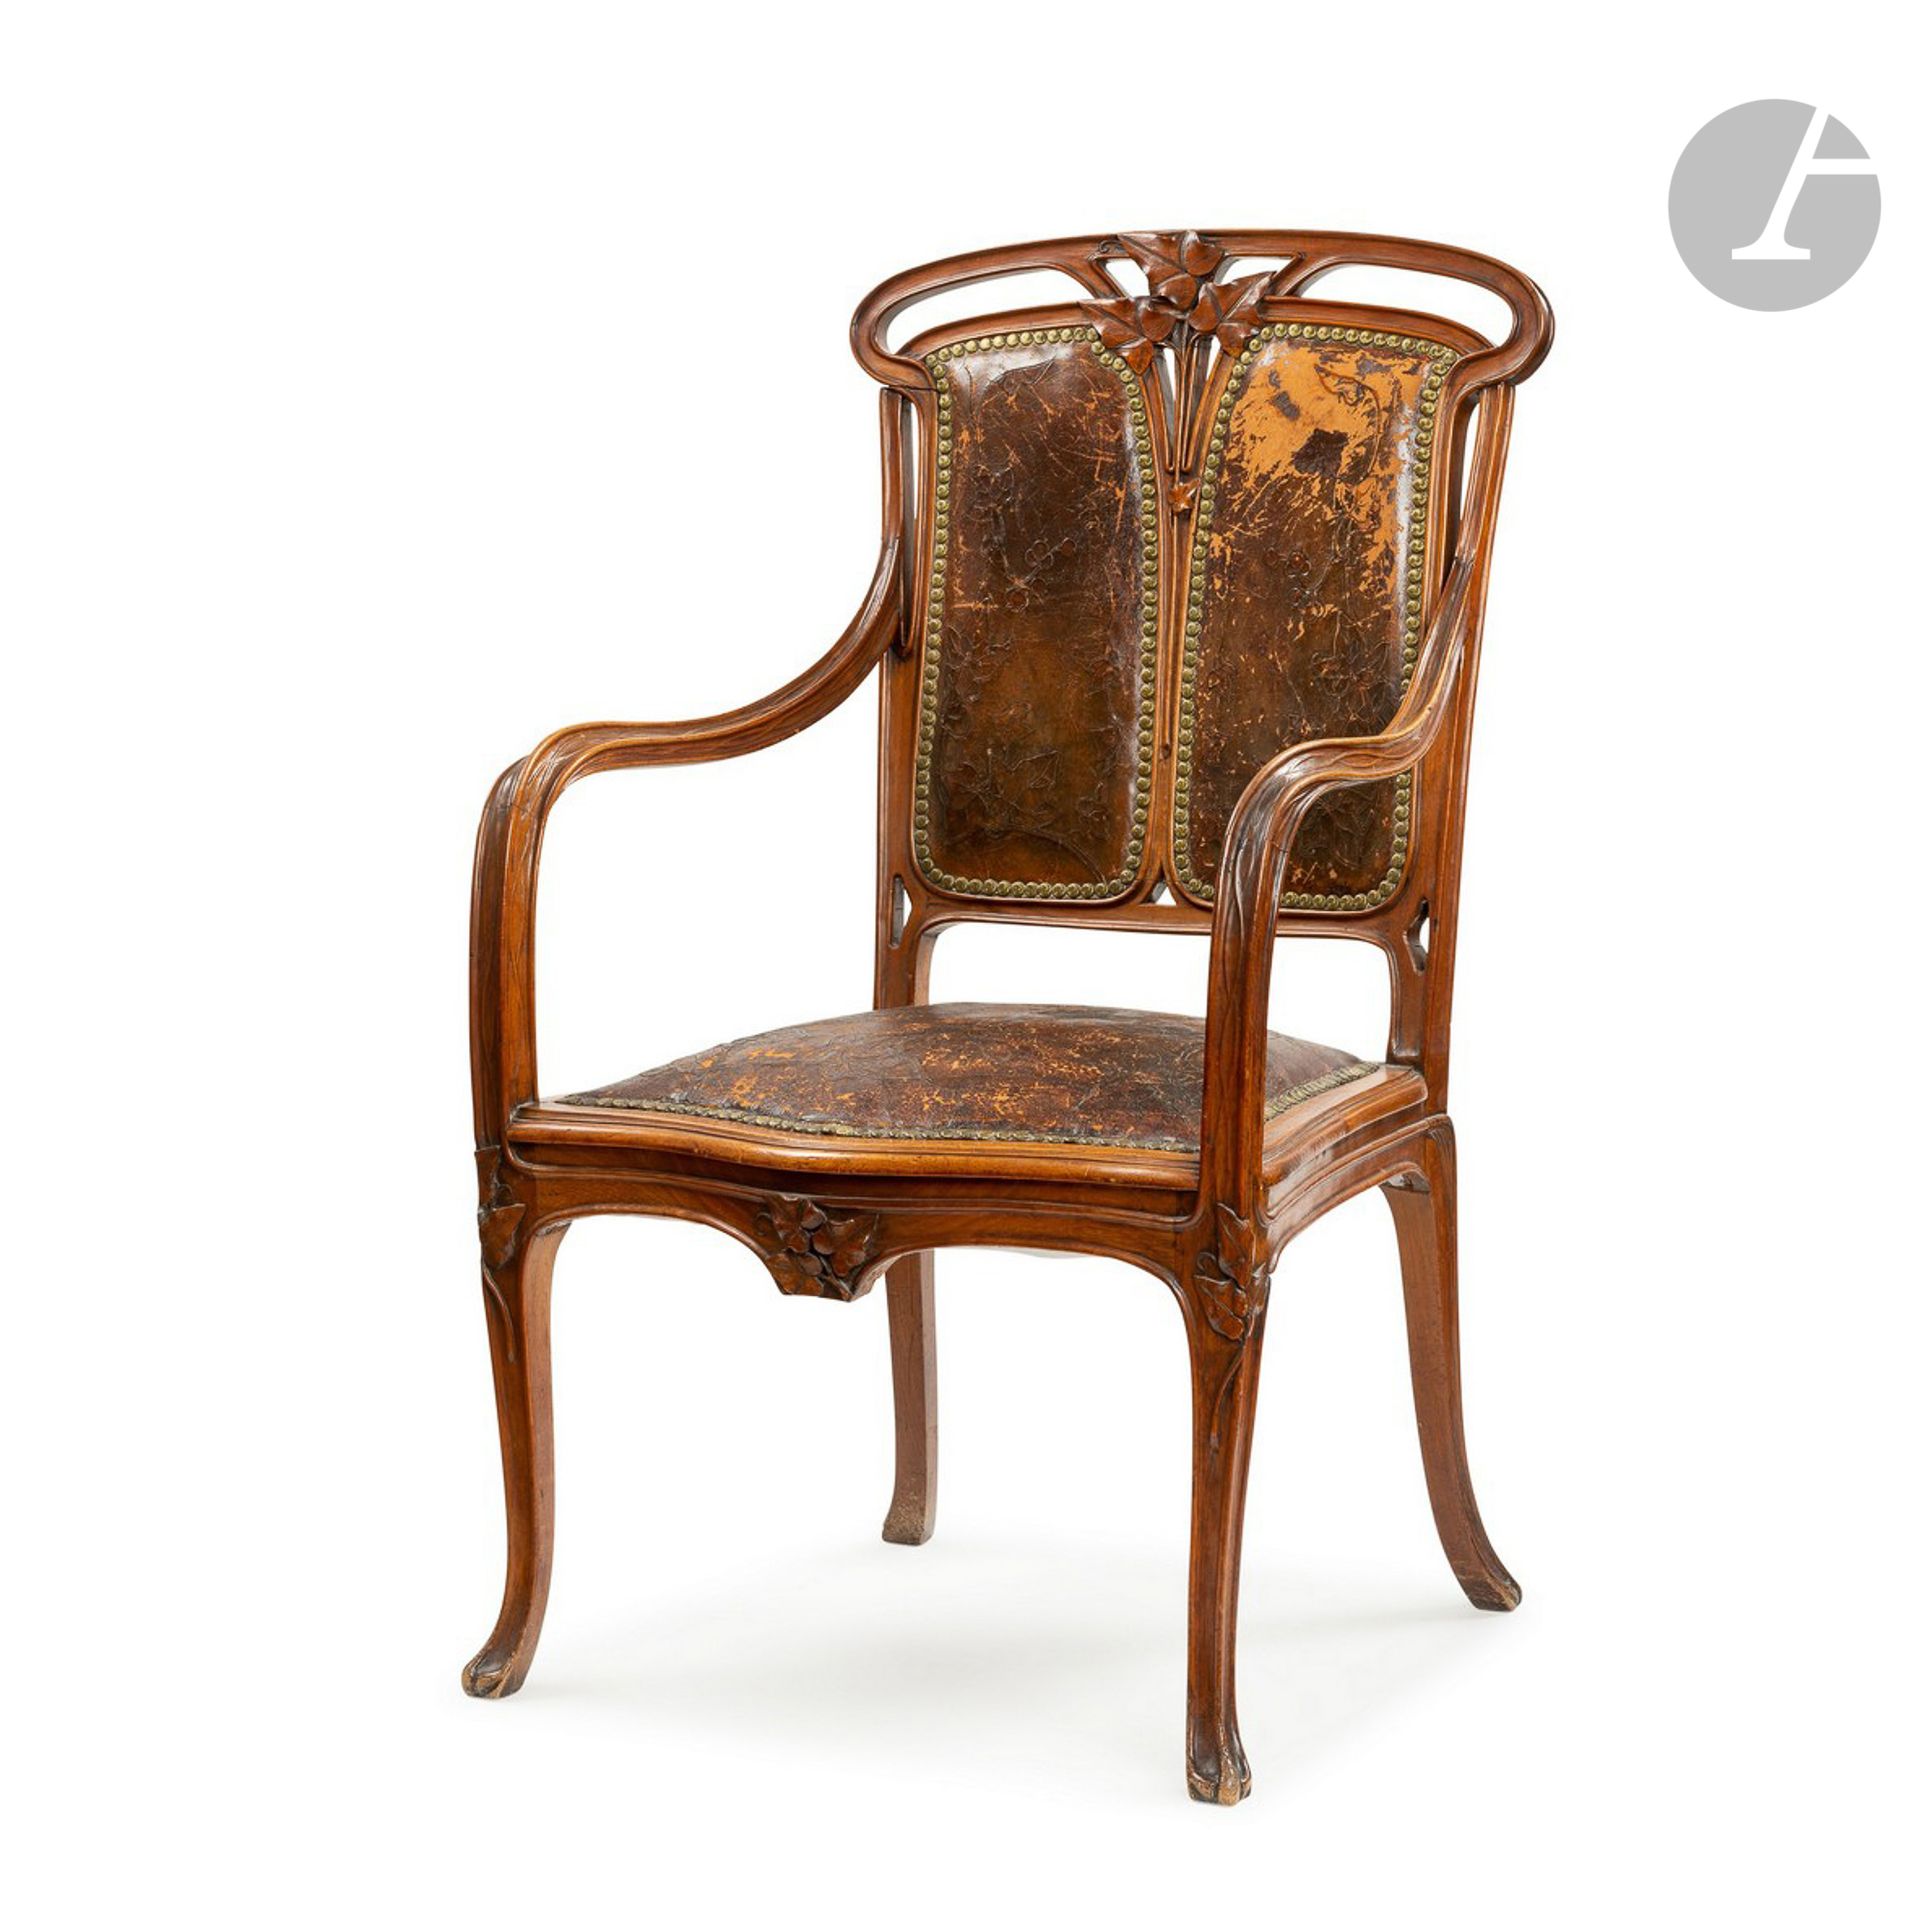 Null 
路易斯-马约雷尔（1859-1926）在南希的作品

常春藤

桃花心木扶手椅，有棱角，有模具，有雕刻。

背面模拟植物交错，并在高处雕刻了标题装饰&hellip;